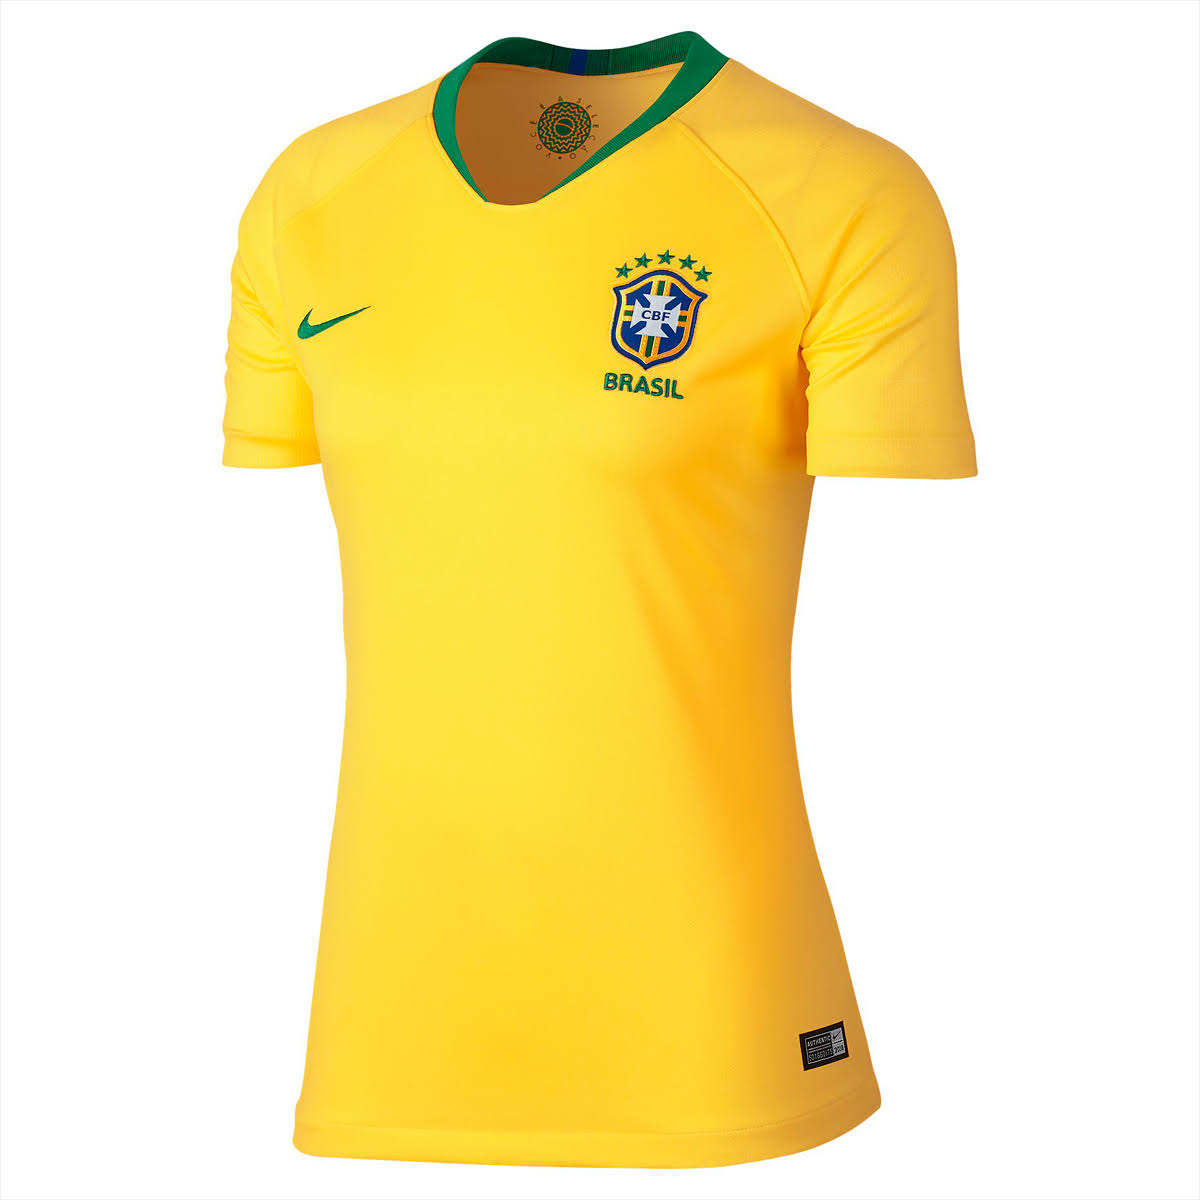 Brazil soccer jersey FIFA World Cup 